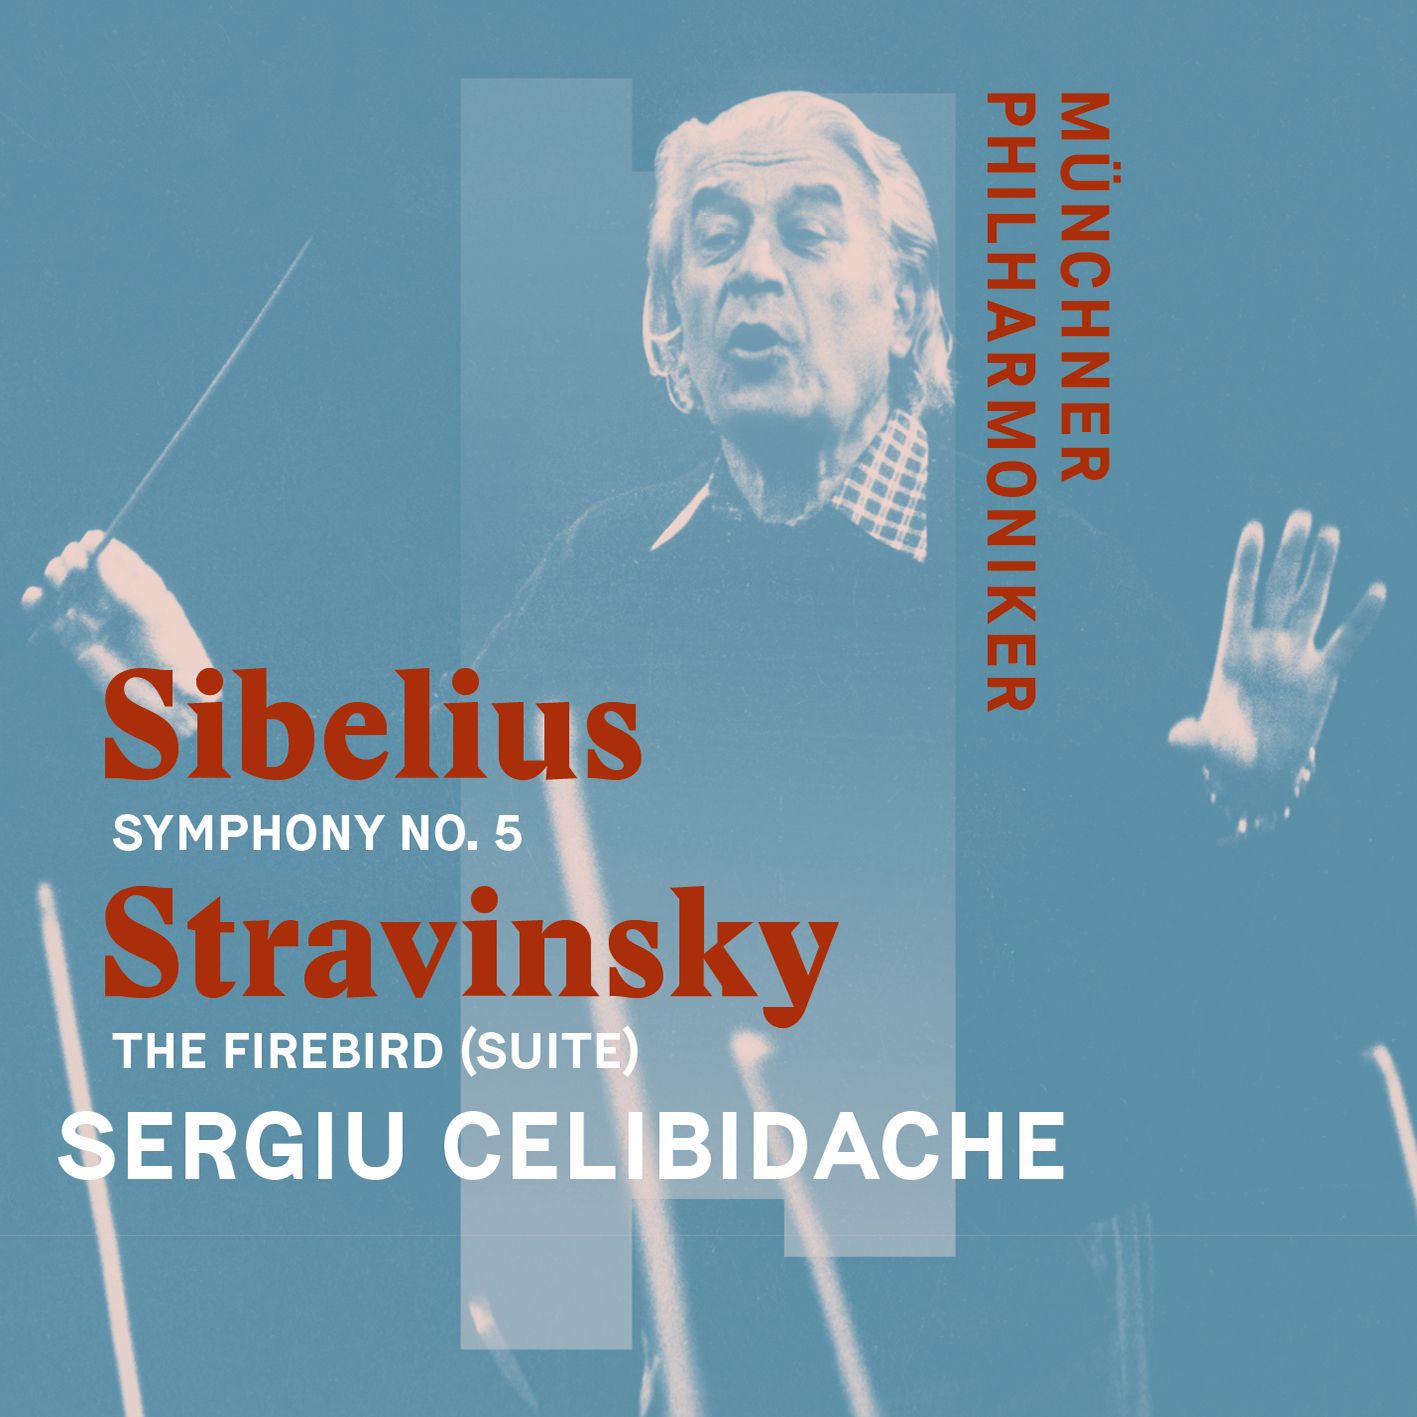 Celibidache in Sibelius and Stravinsky